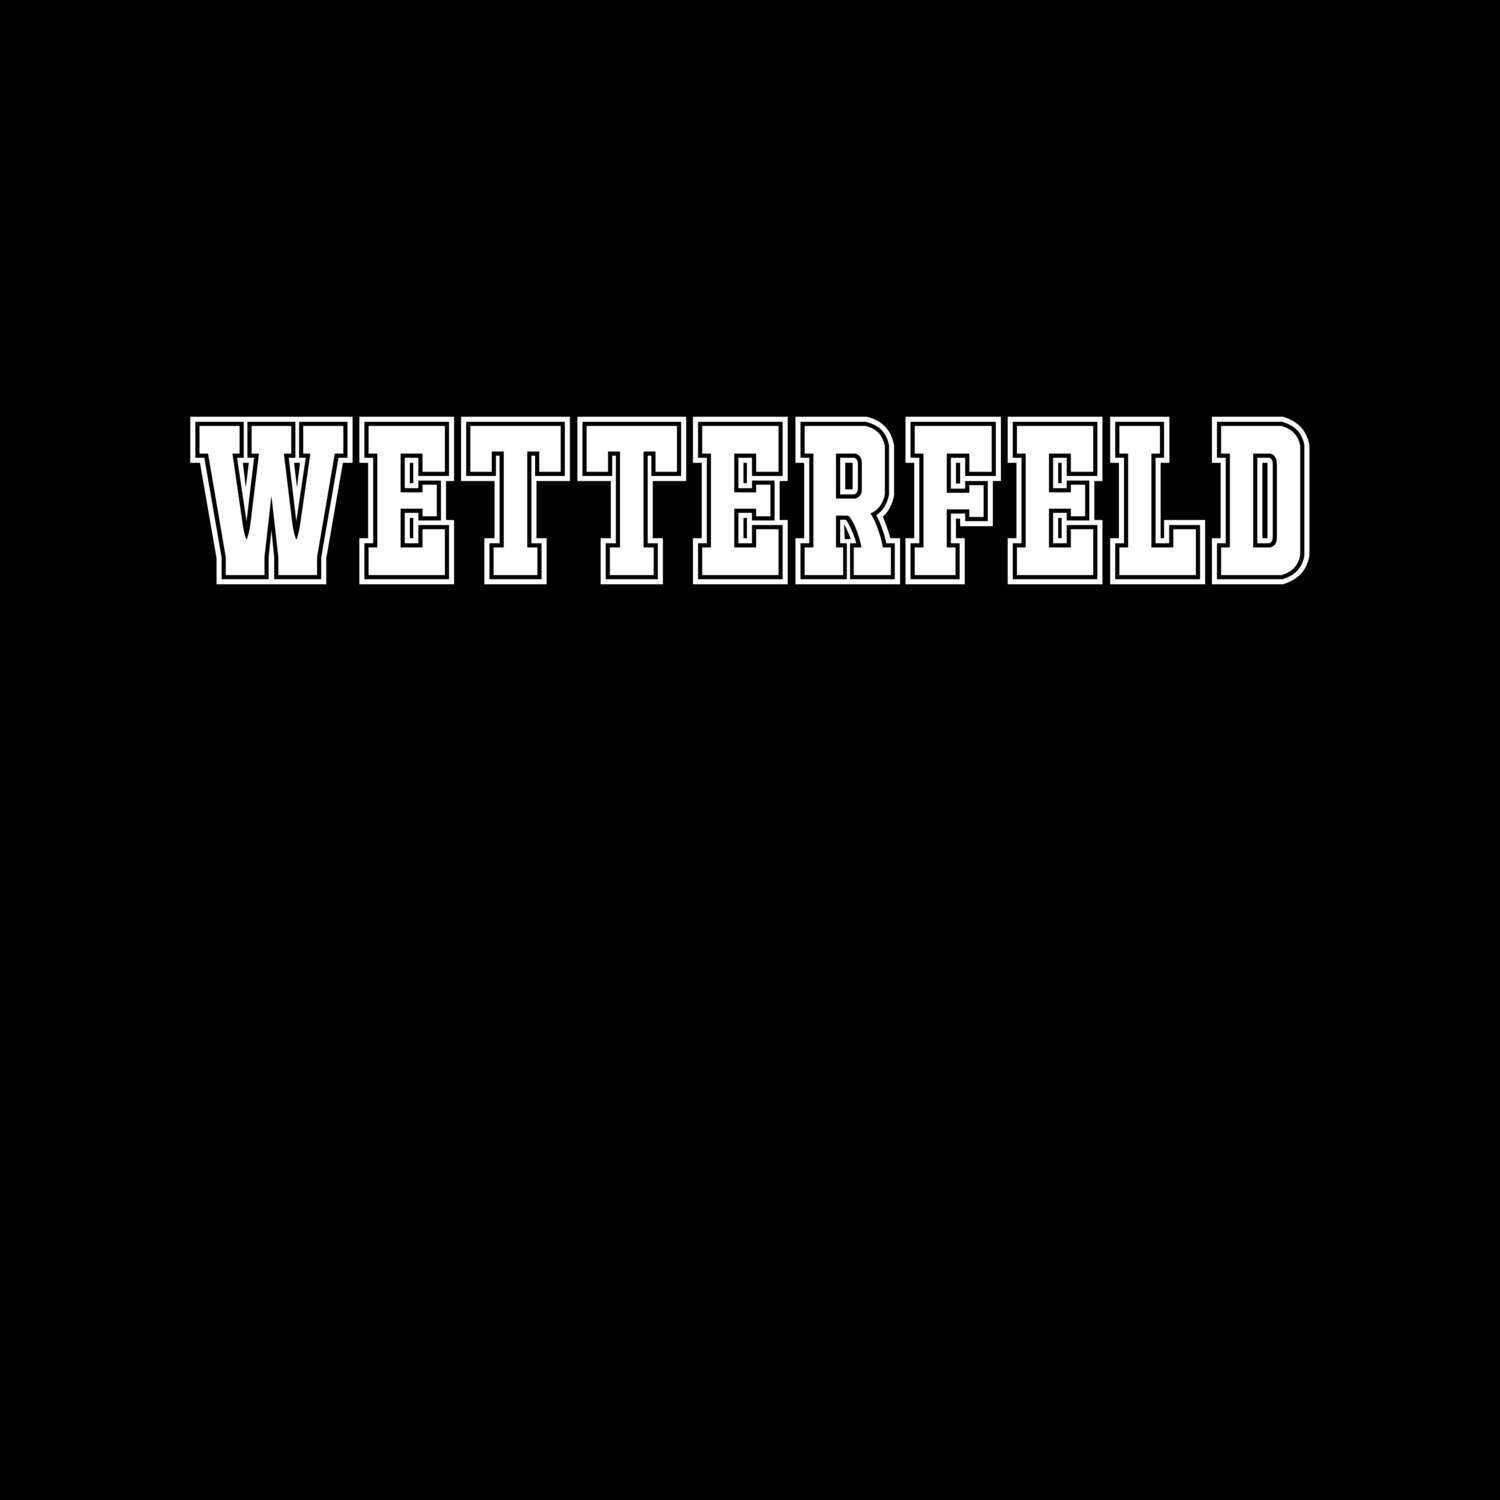 Wetterfeld T-Shirt »Classic«